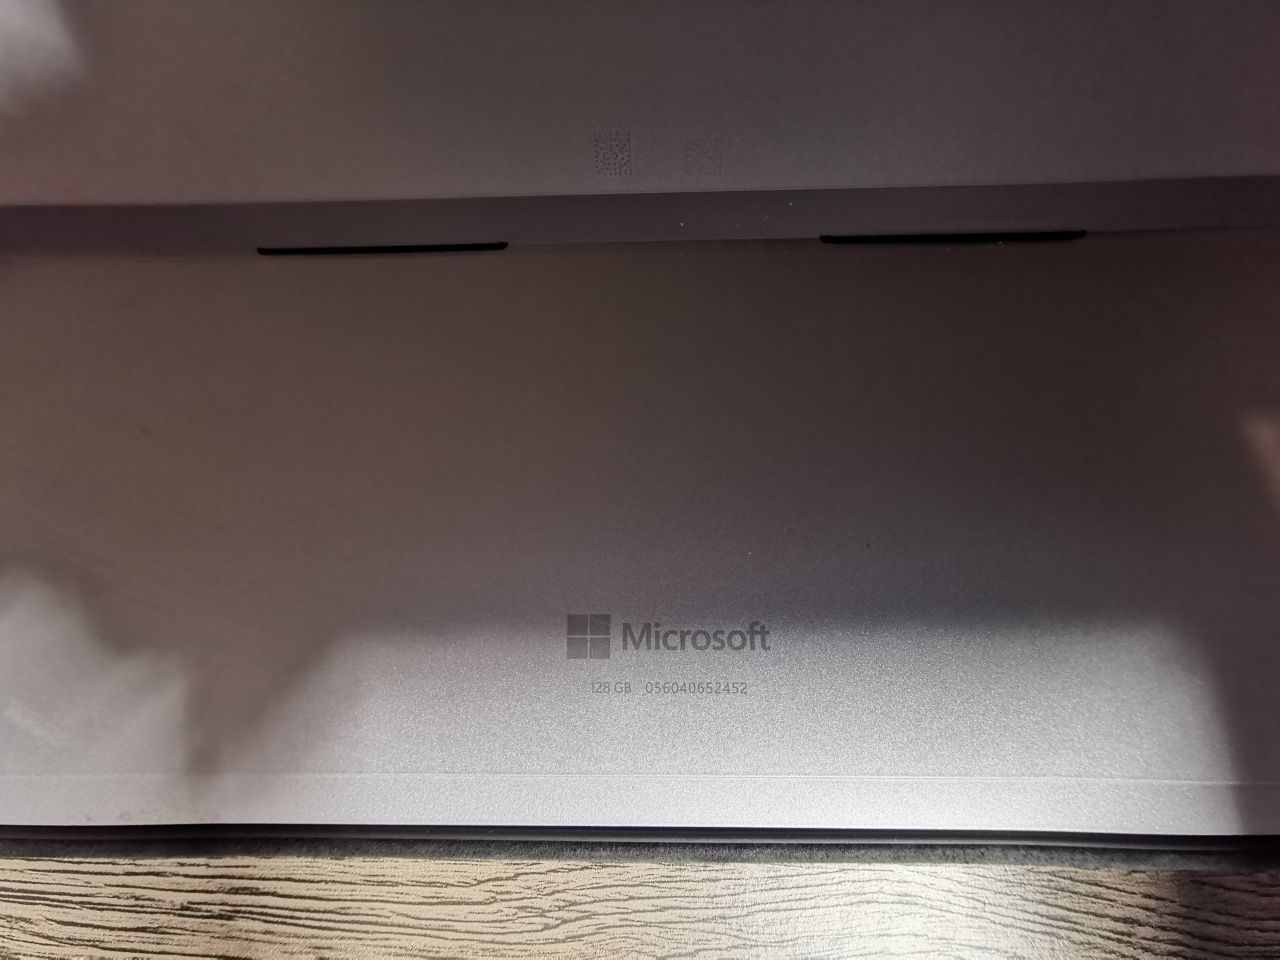 Micrasoft Surface 3 1657 2 in 1 Komputer/Tablet FHD/4GB/128GB SSD/Win1